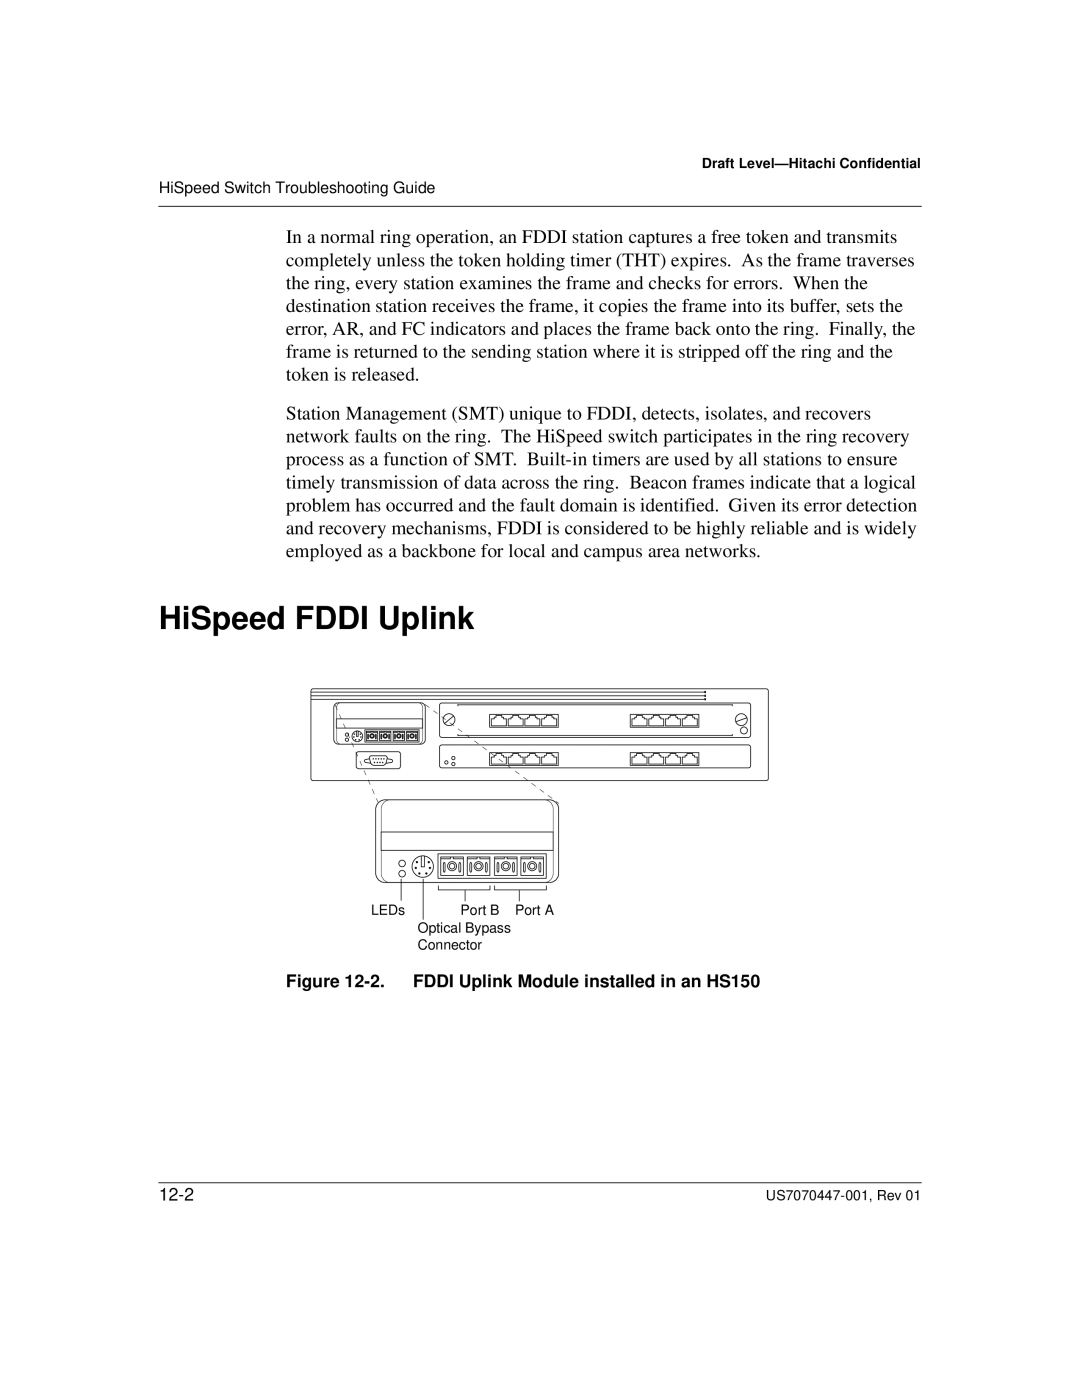 Hitachi US7070447-001 manual HiSpeed FDDI Uplink, 2. FDDI Uplink Module installed in an HS150 